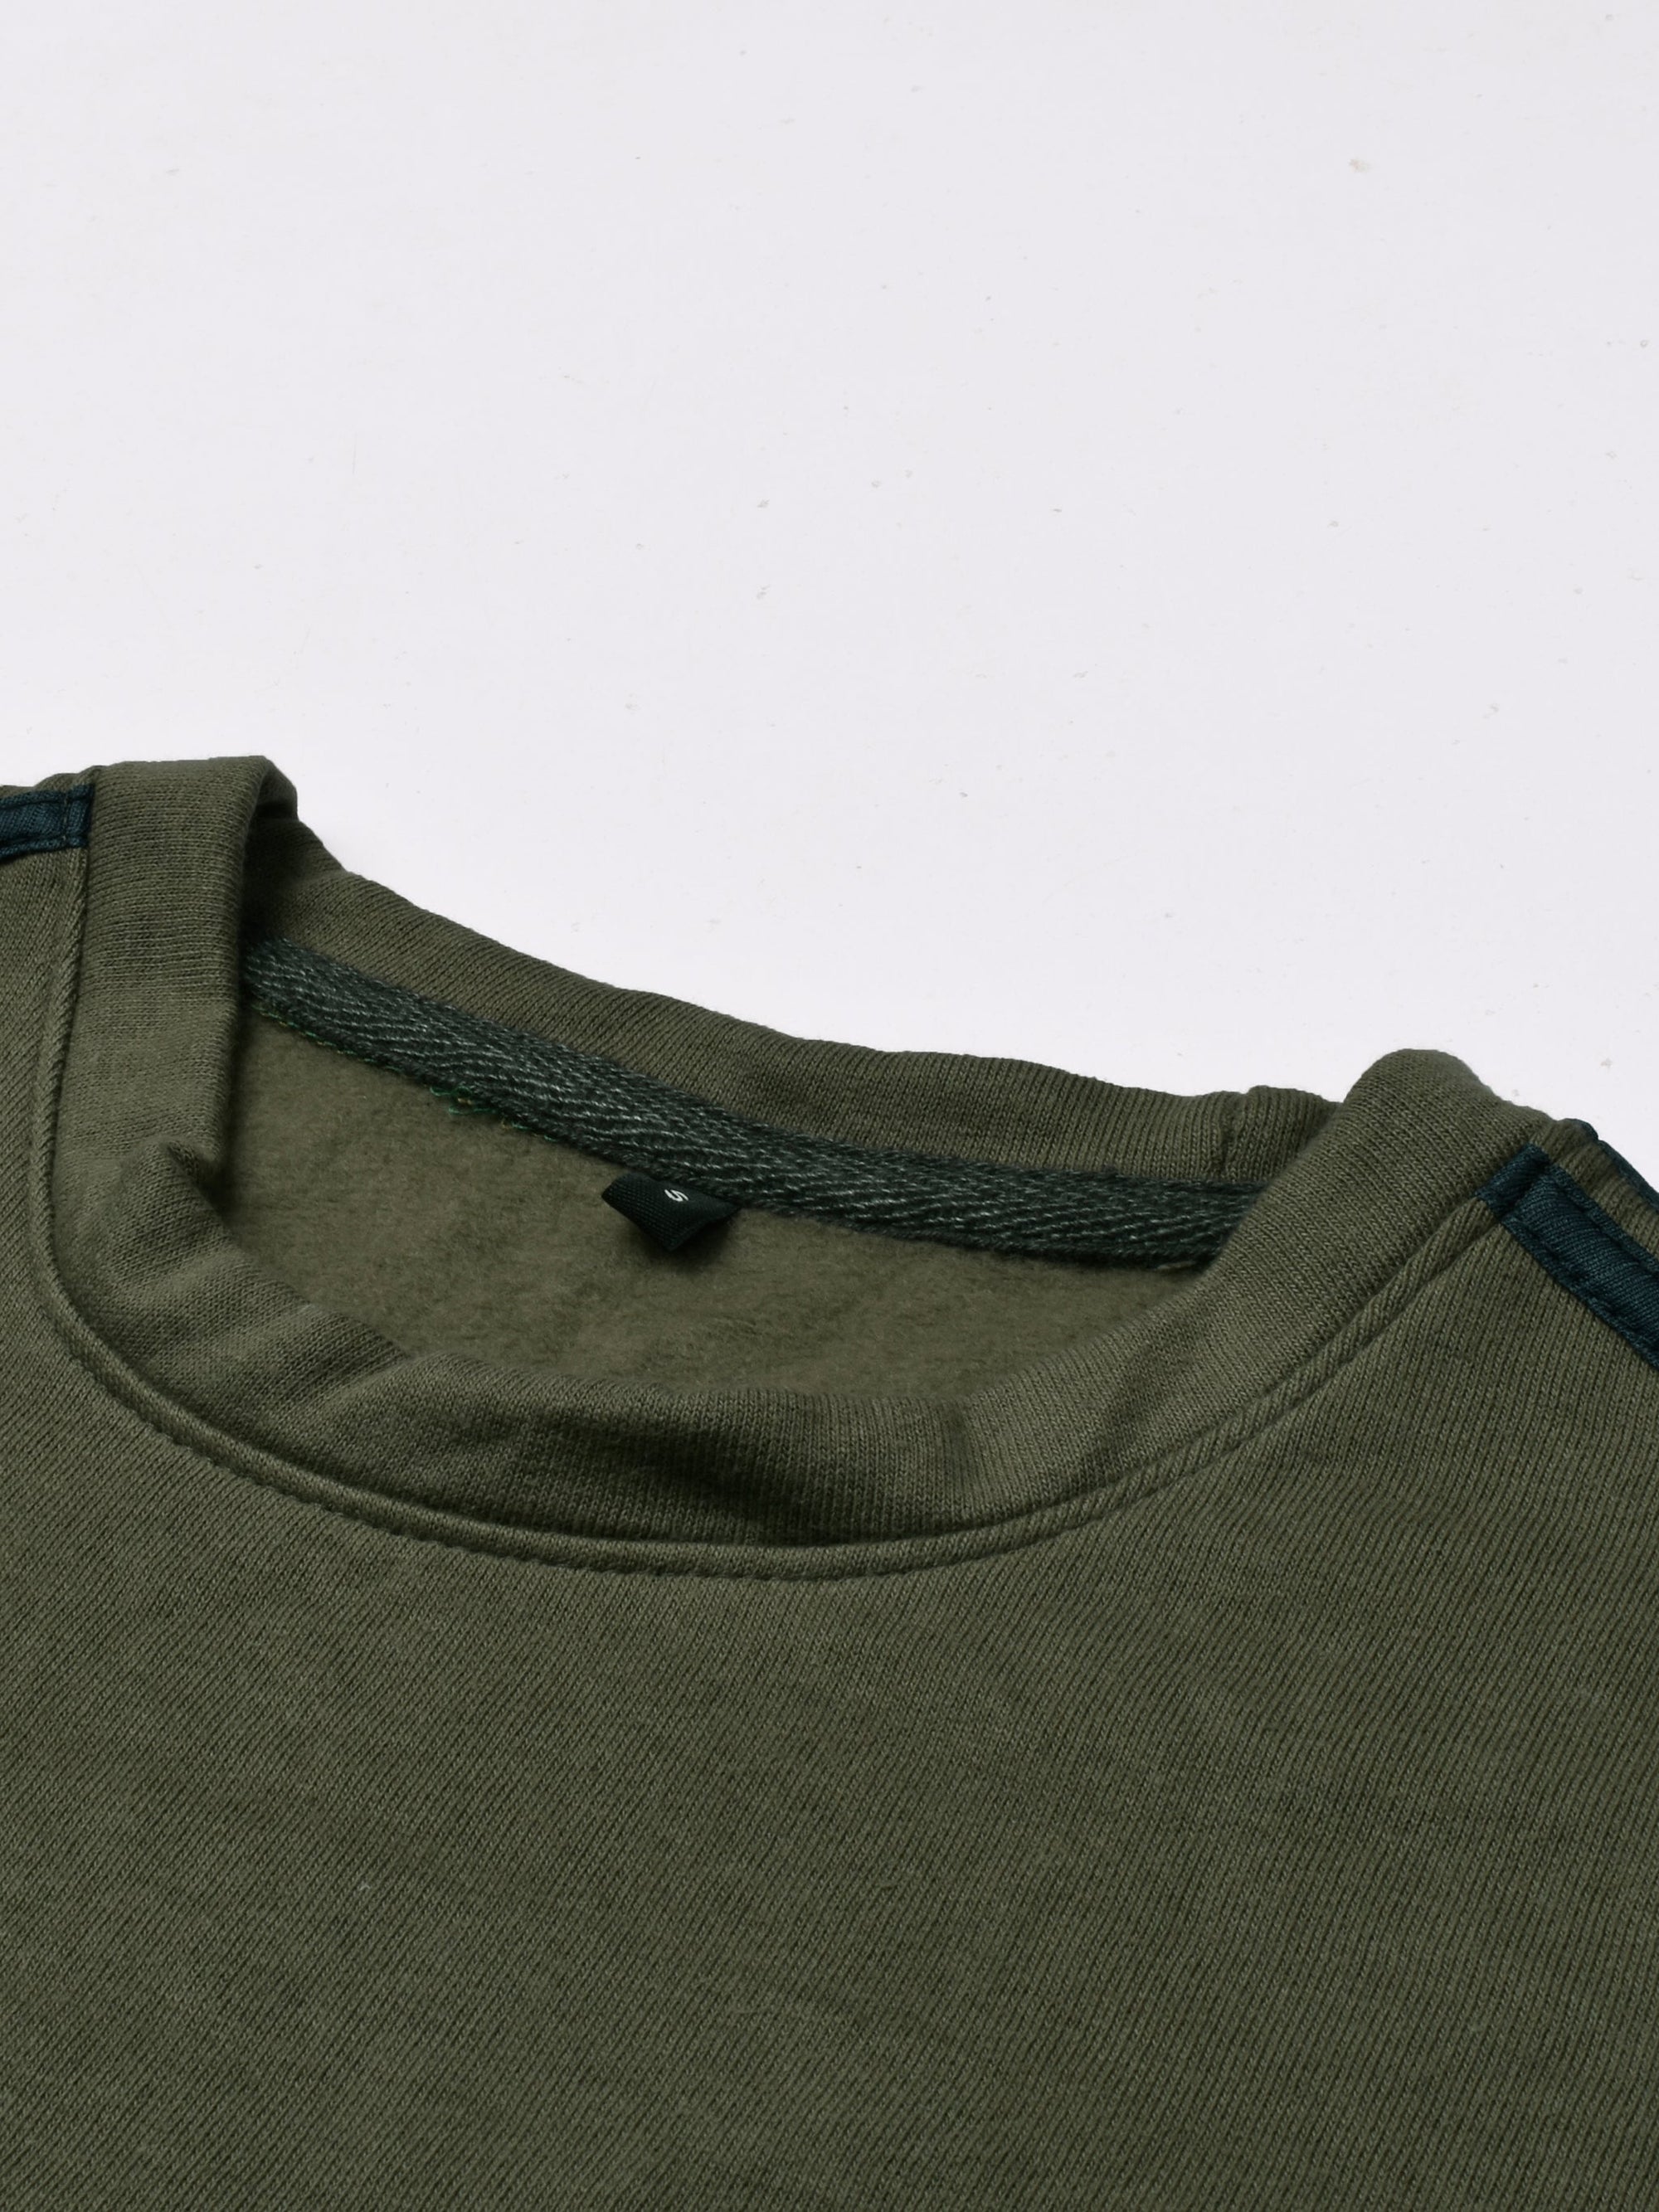 Premium Quality Crew Neck Fleece Sweatshirt For Men-Olive Green With Navy Stripes-BE16